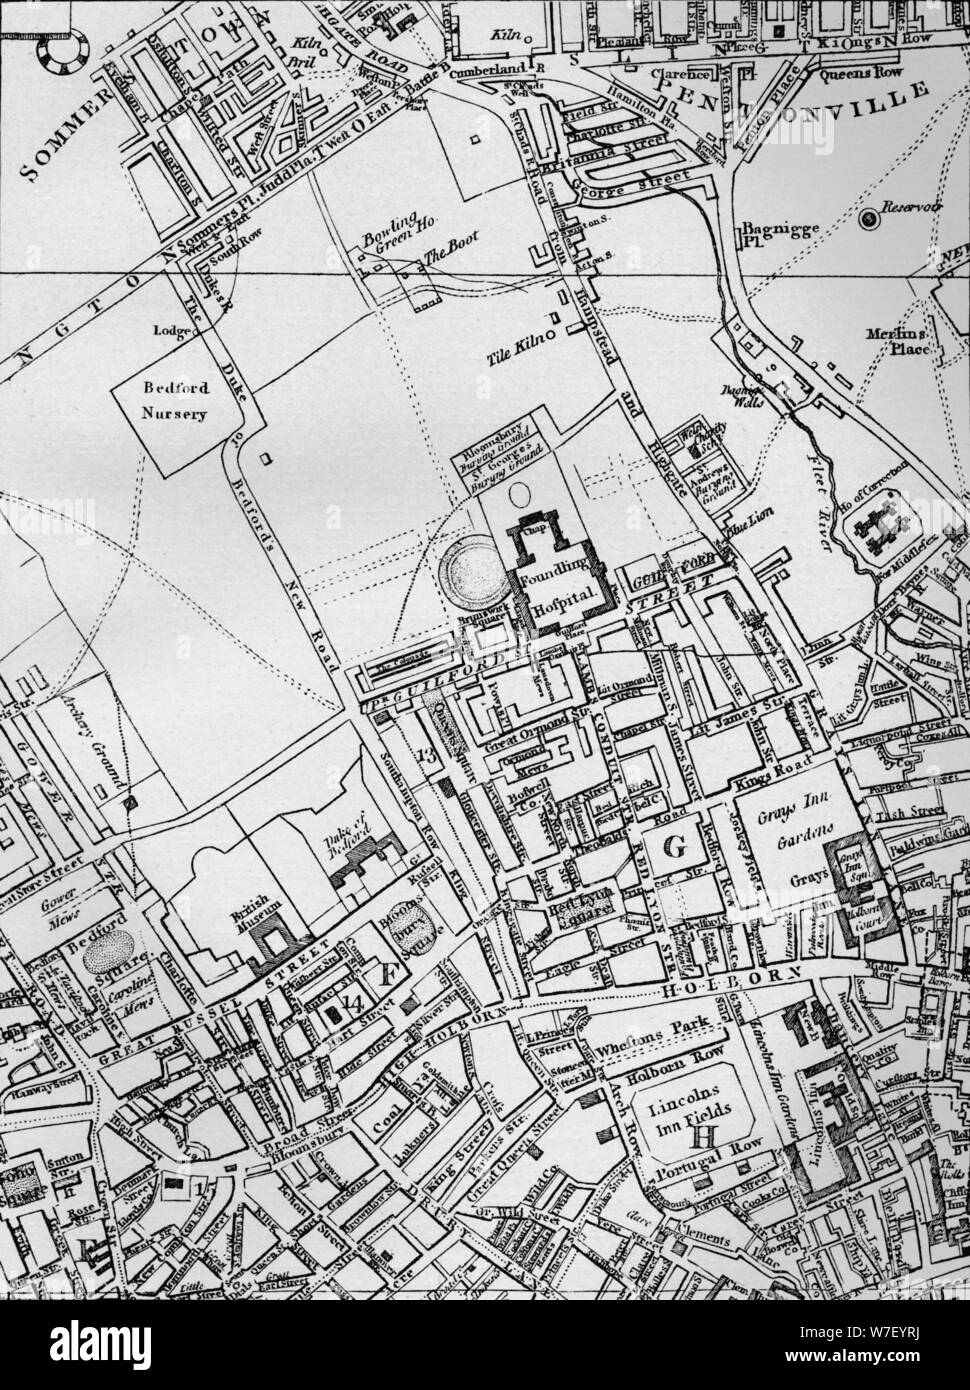 Un plan de Holborn, St Giles y St Pancras, en Londres, en 1800 (1911). Artista: Desconocido. Foto de stock